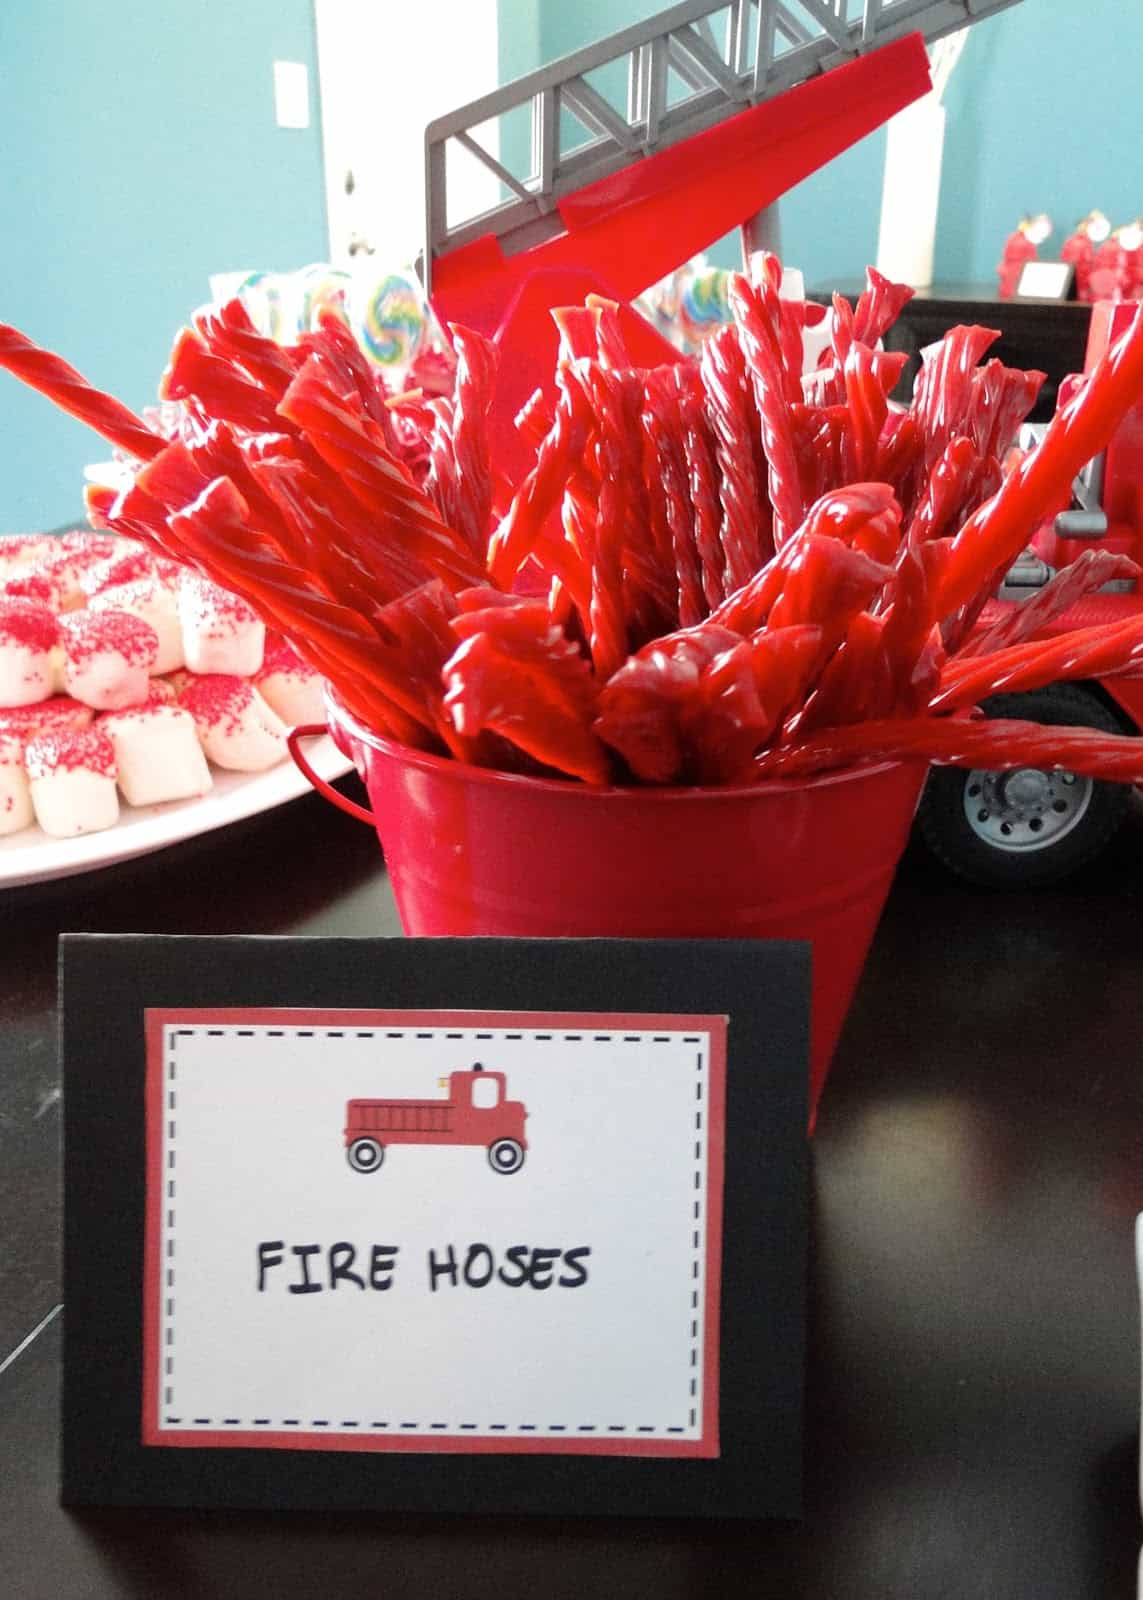 fire truck birthday party ideas